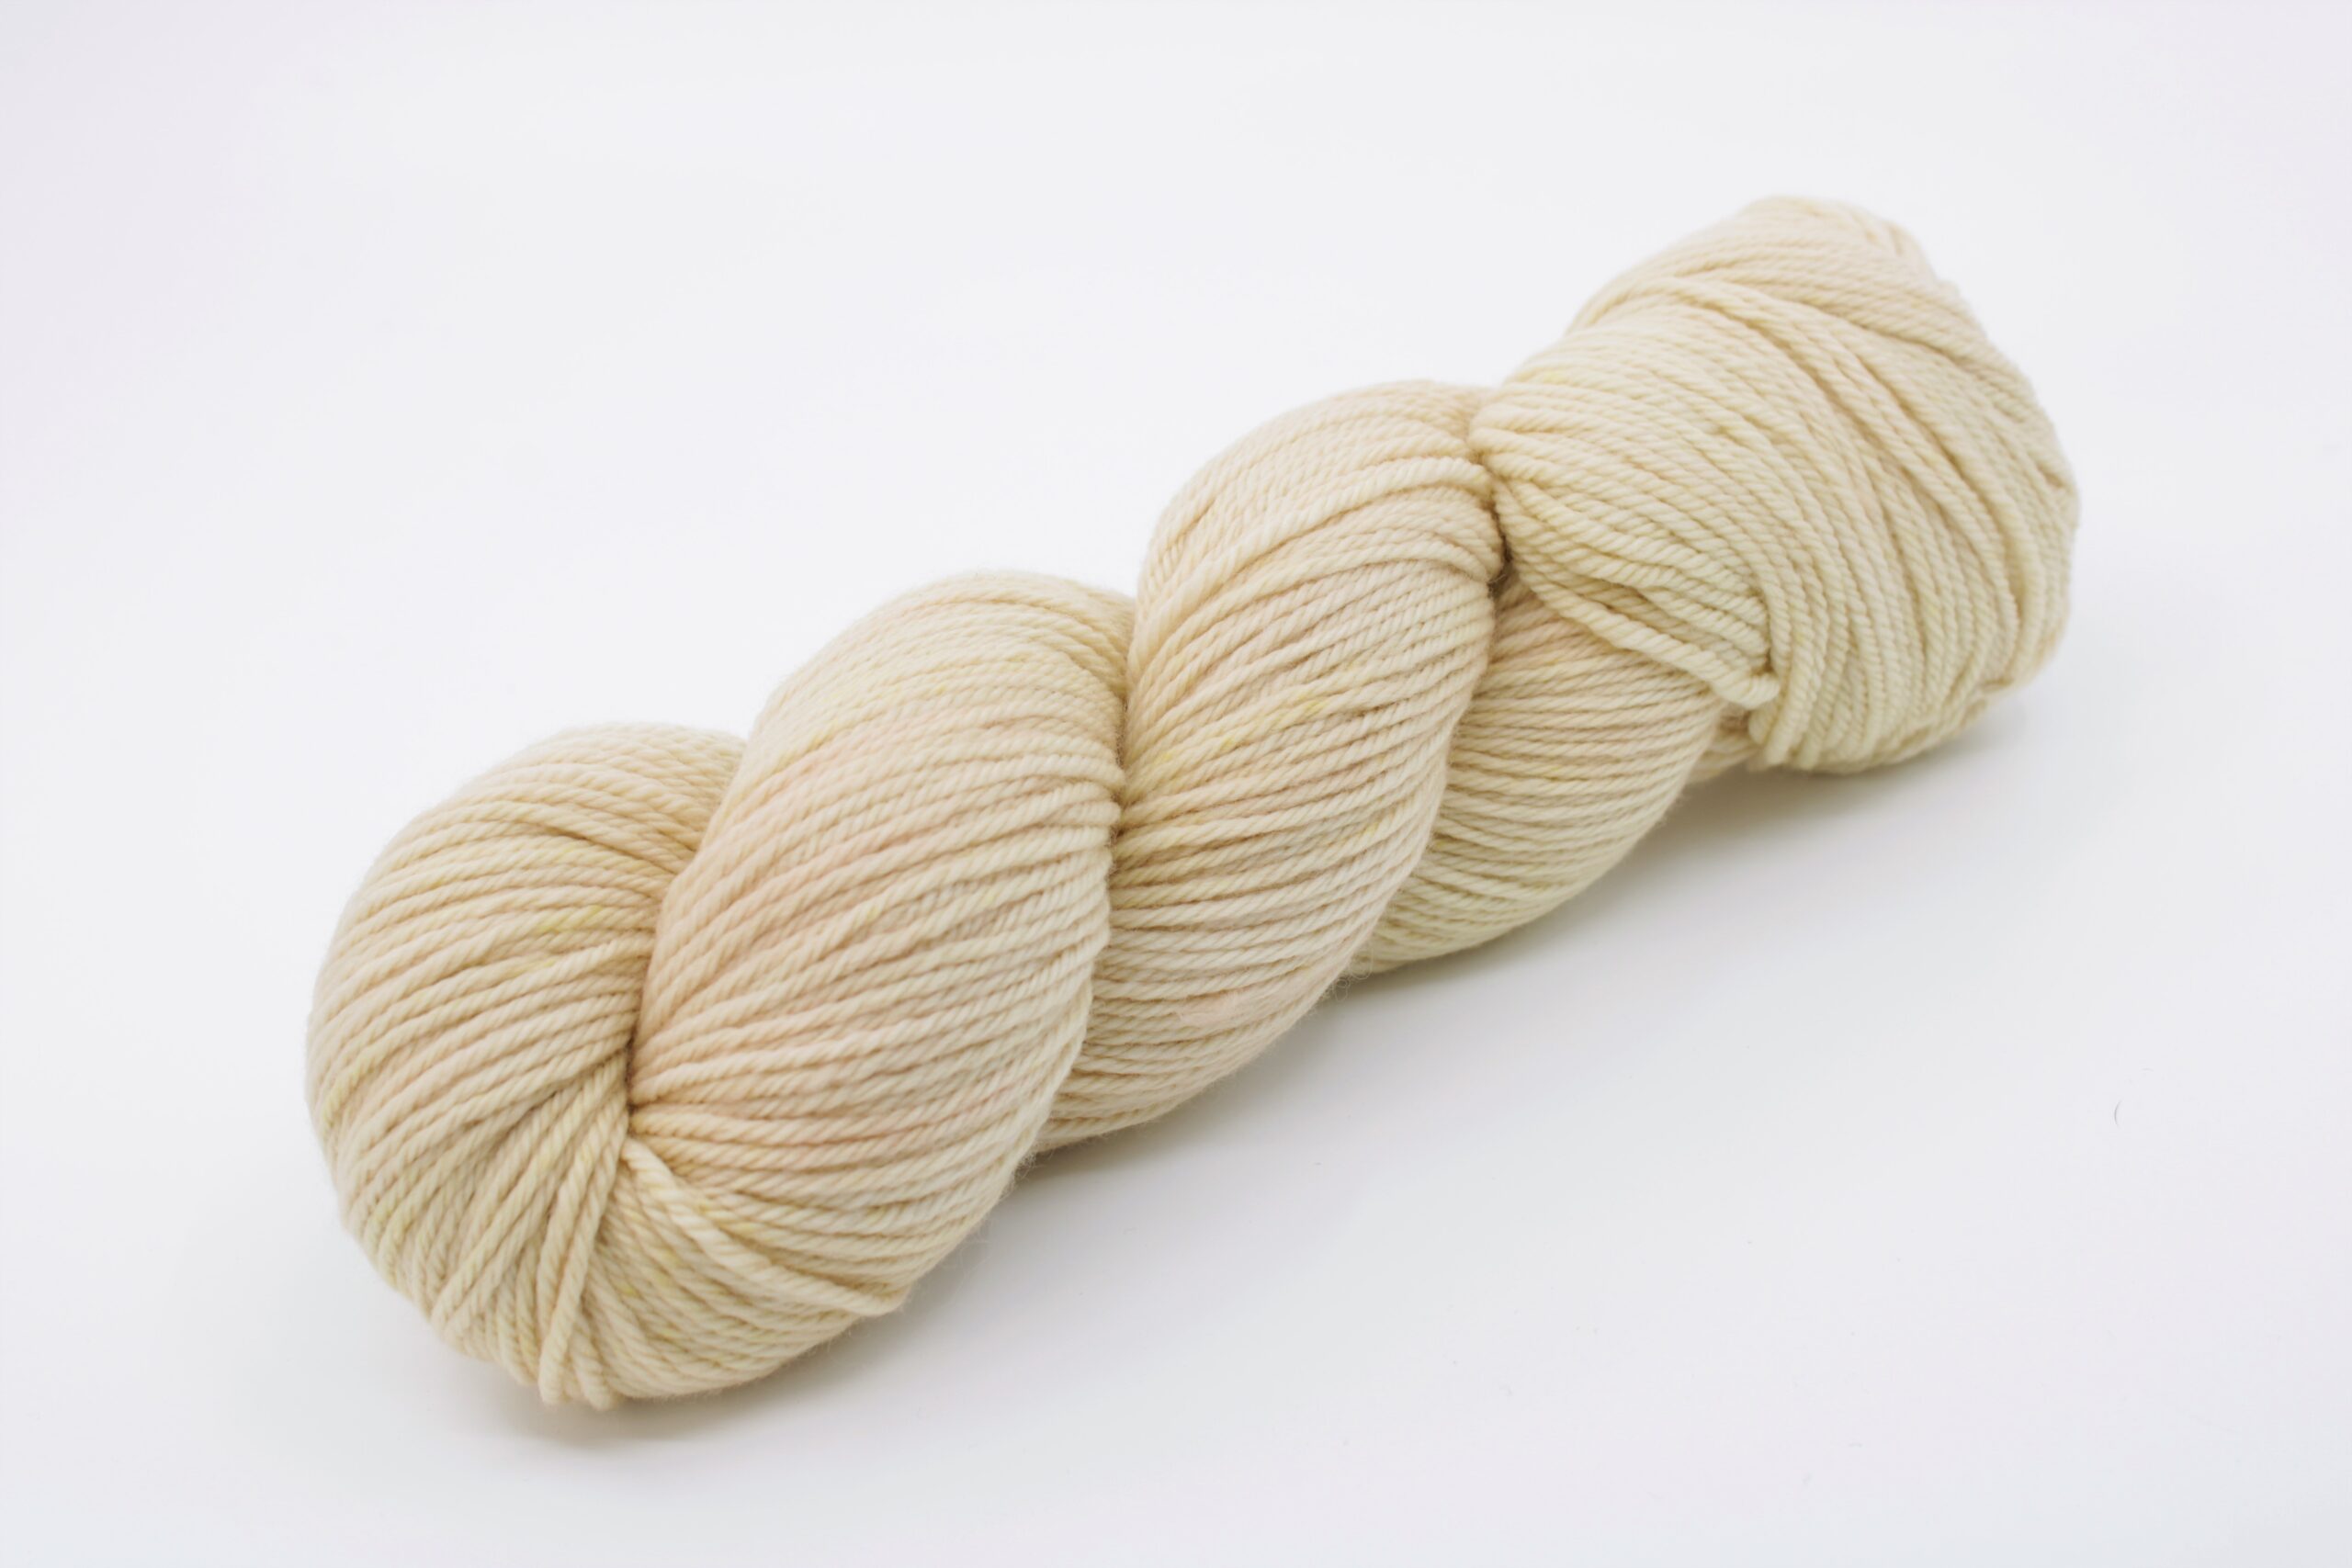 Fibrani wool, base: Flocon DK. 100% untreated merino wool, Ivory color. Color: Douglas.0.